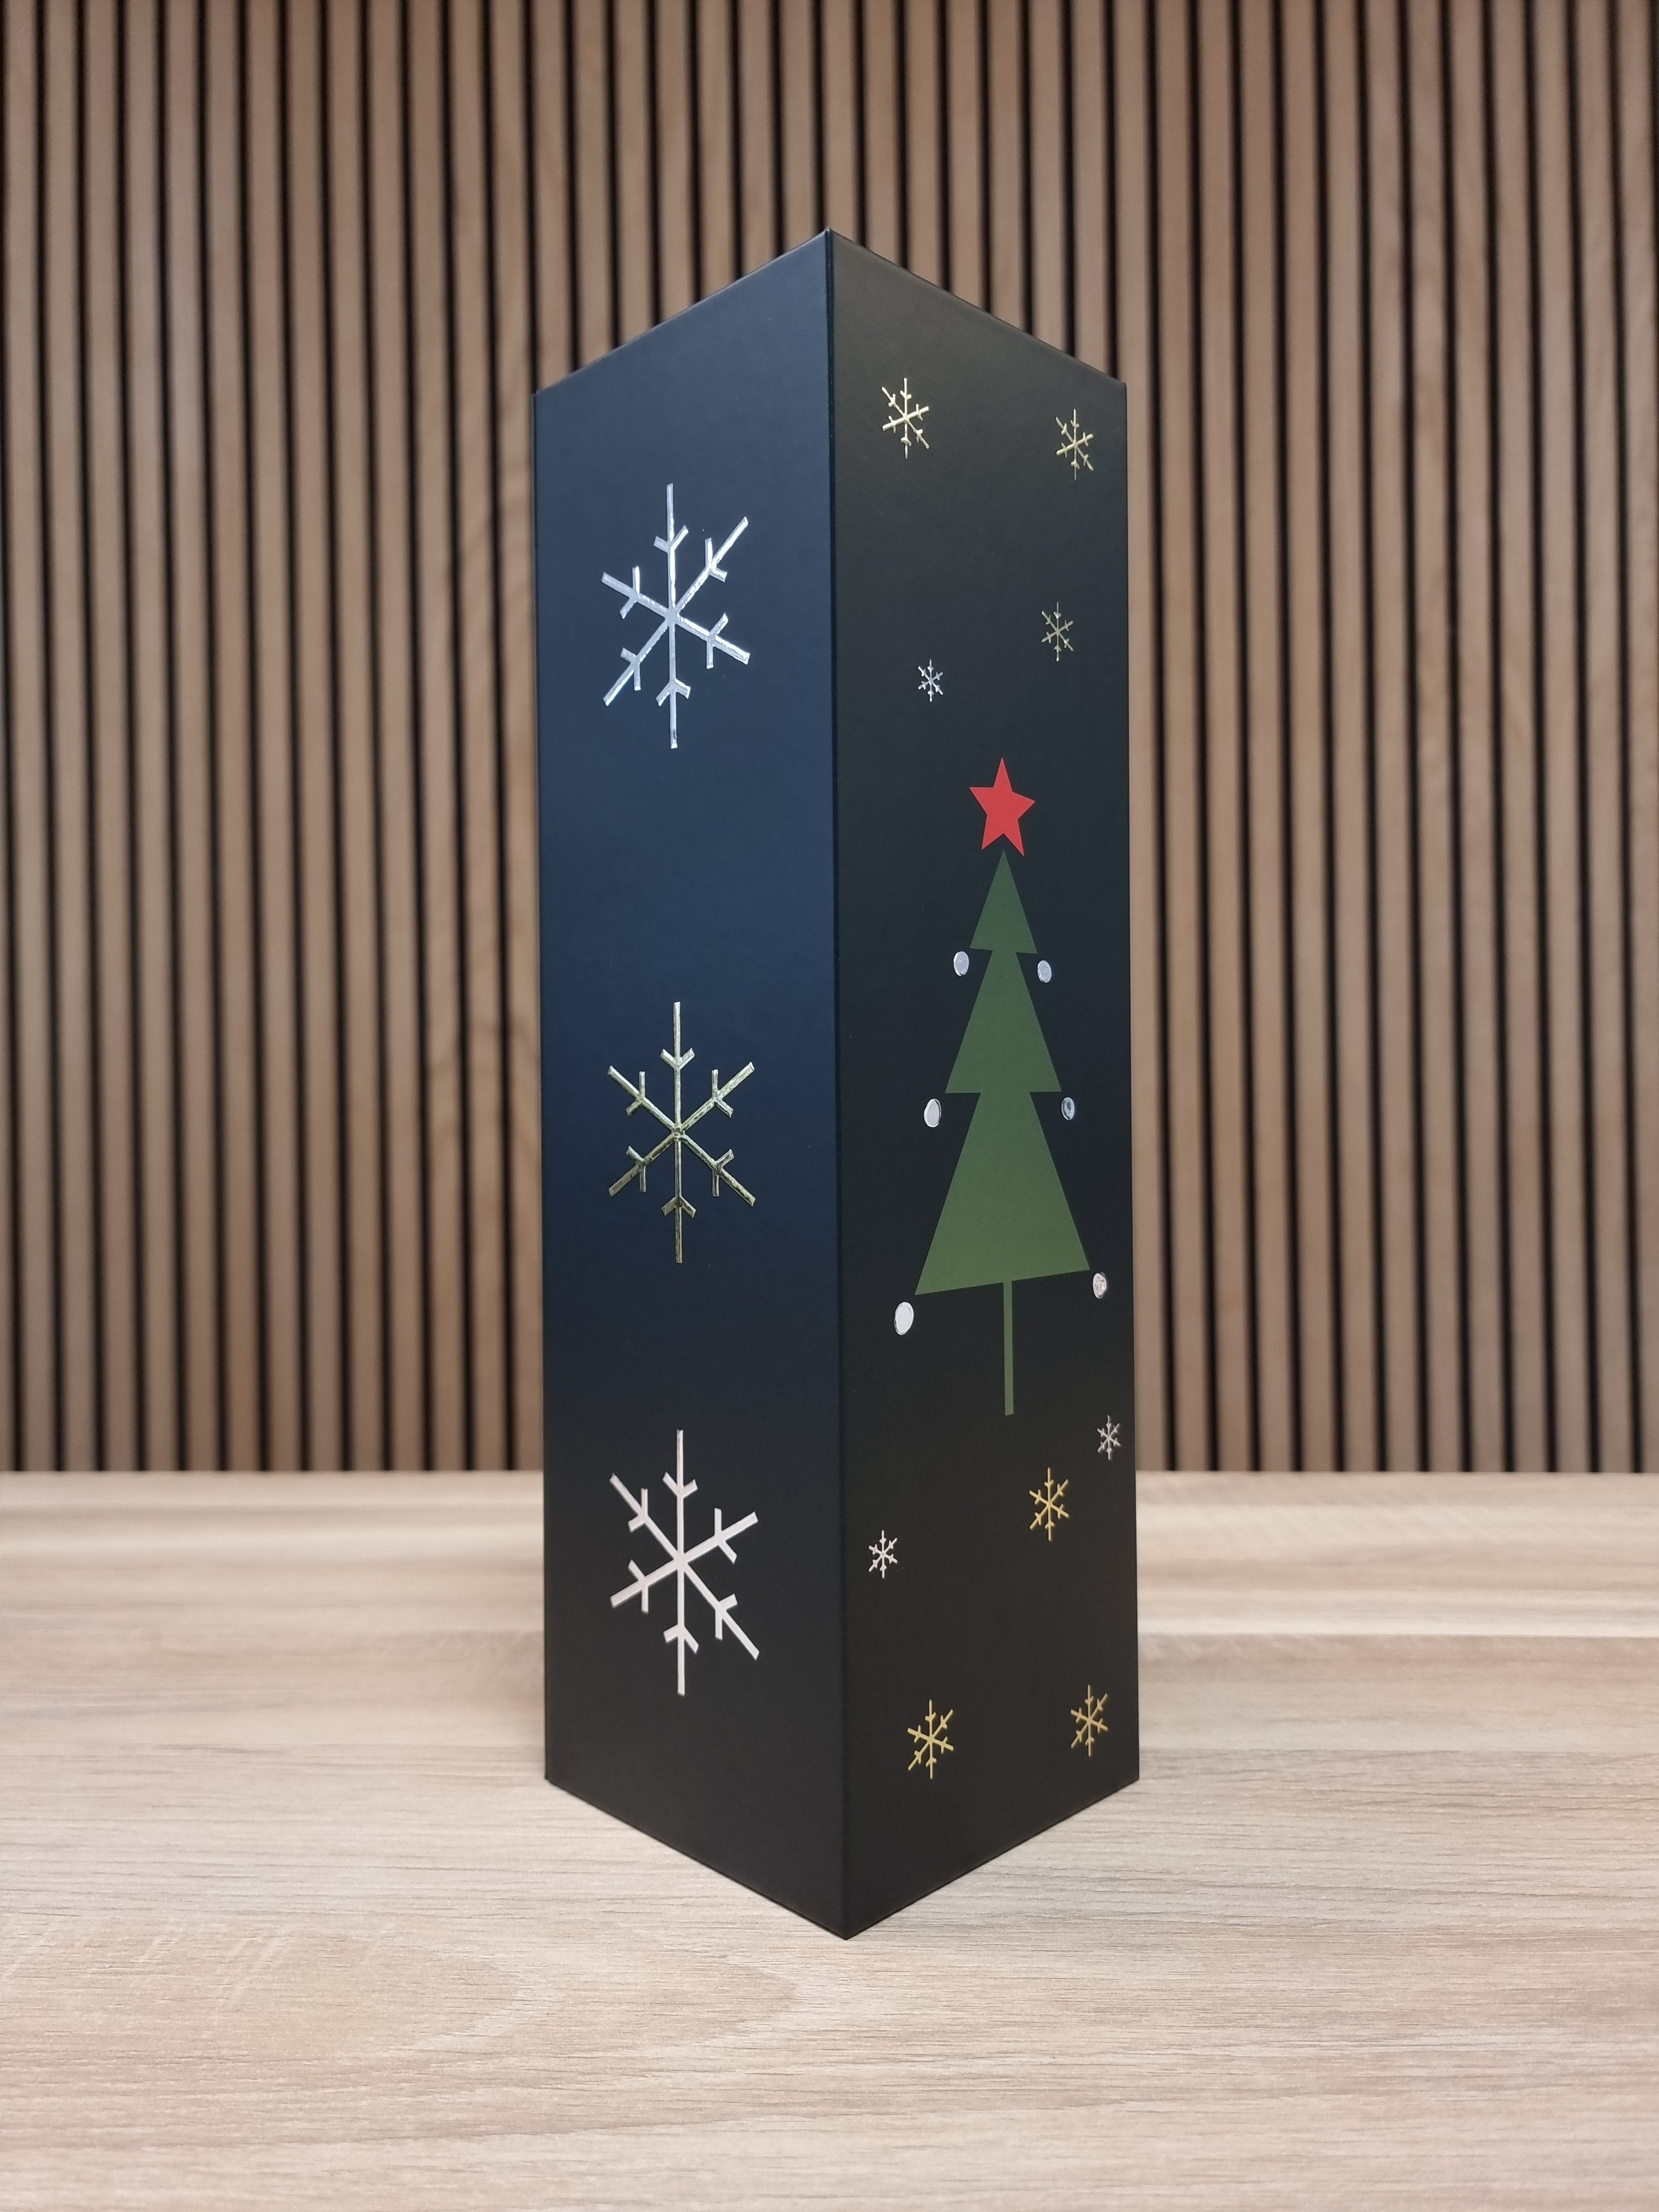 Wine box - A Christmas Story